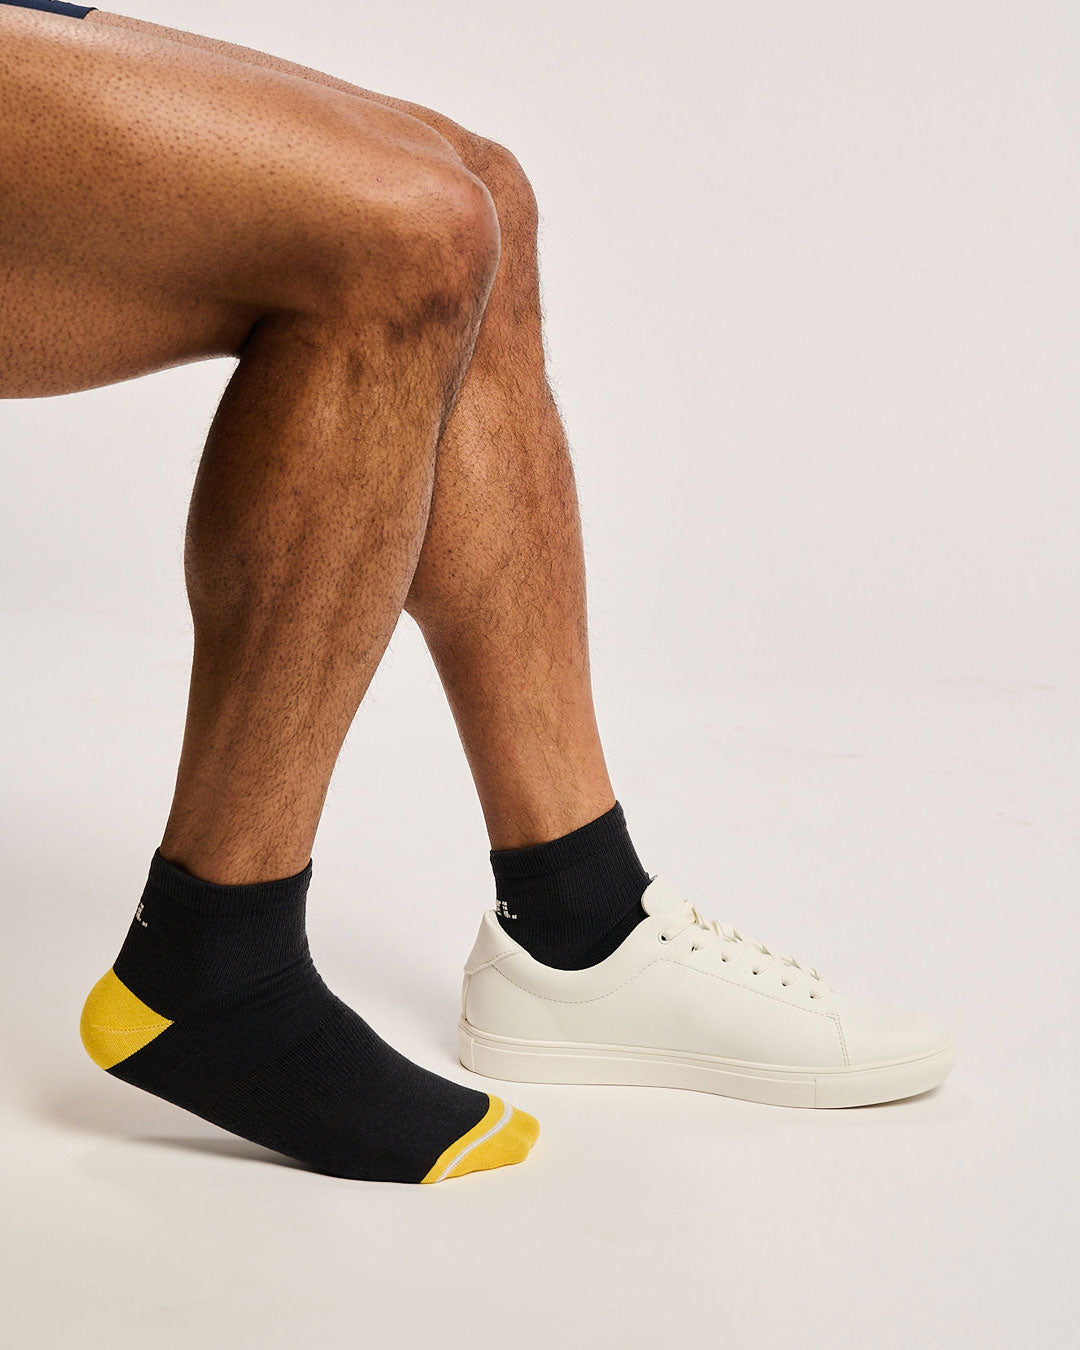 Eco-friendly quarter length socks. Seamless toe sustainable athletic socks.